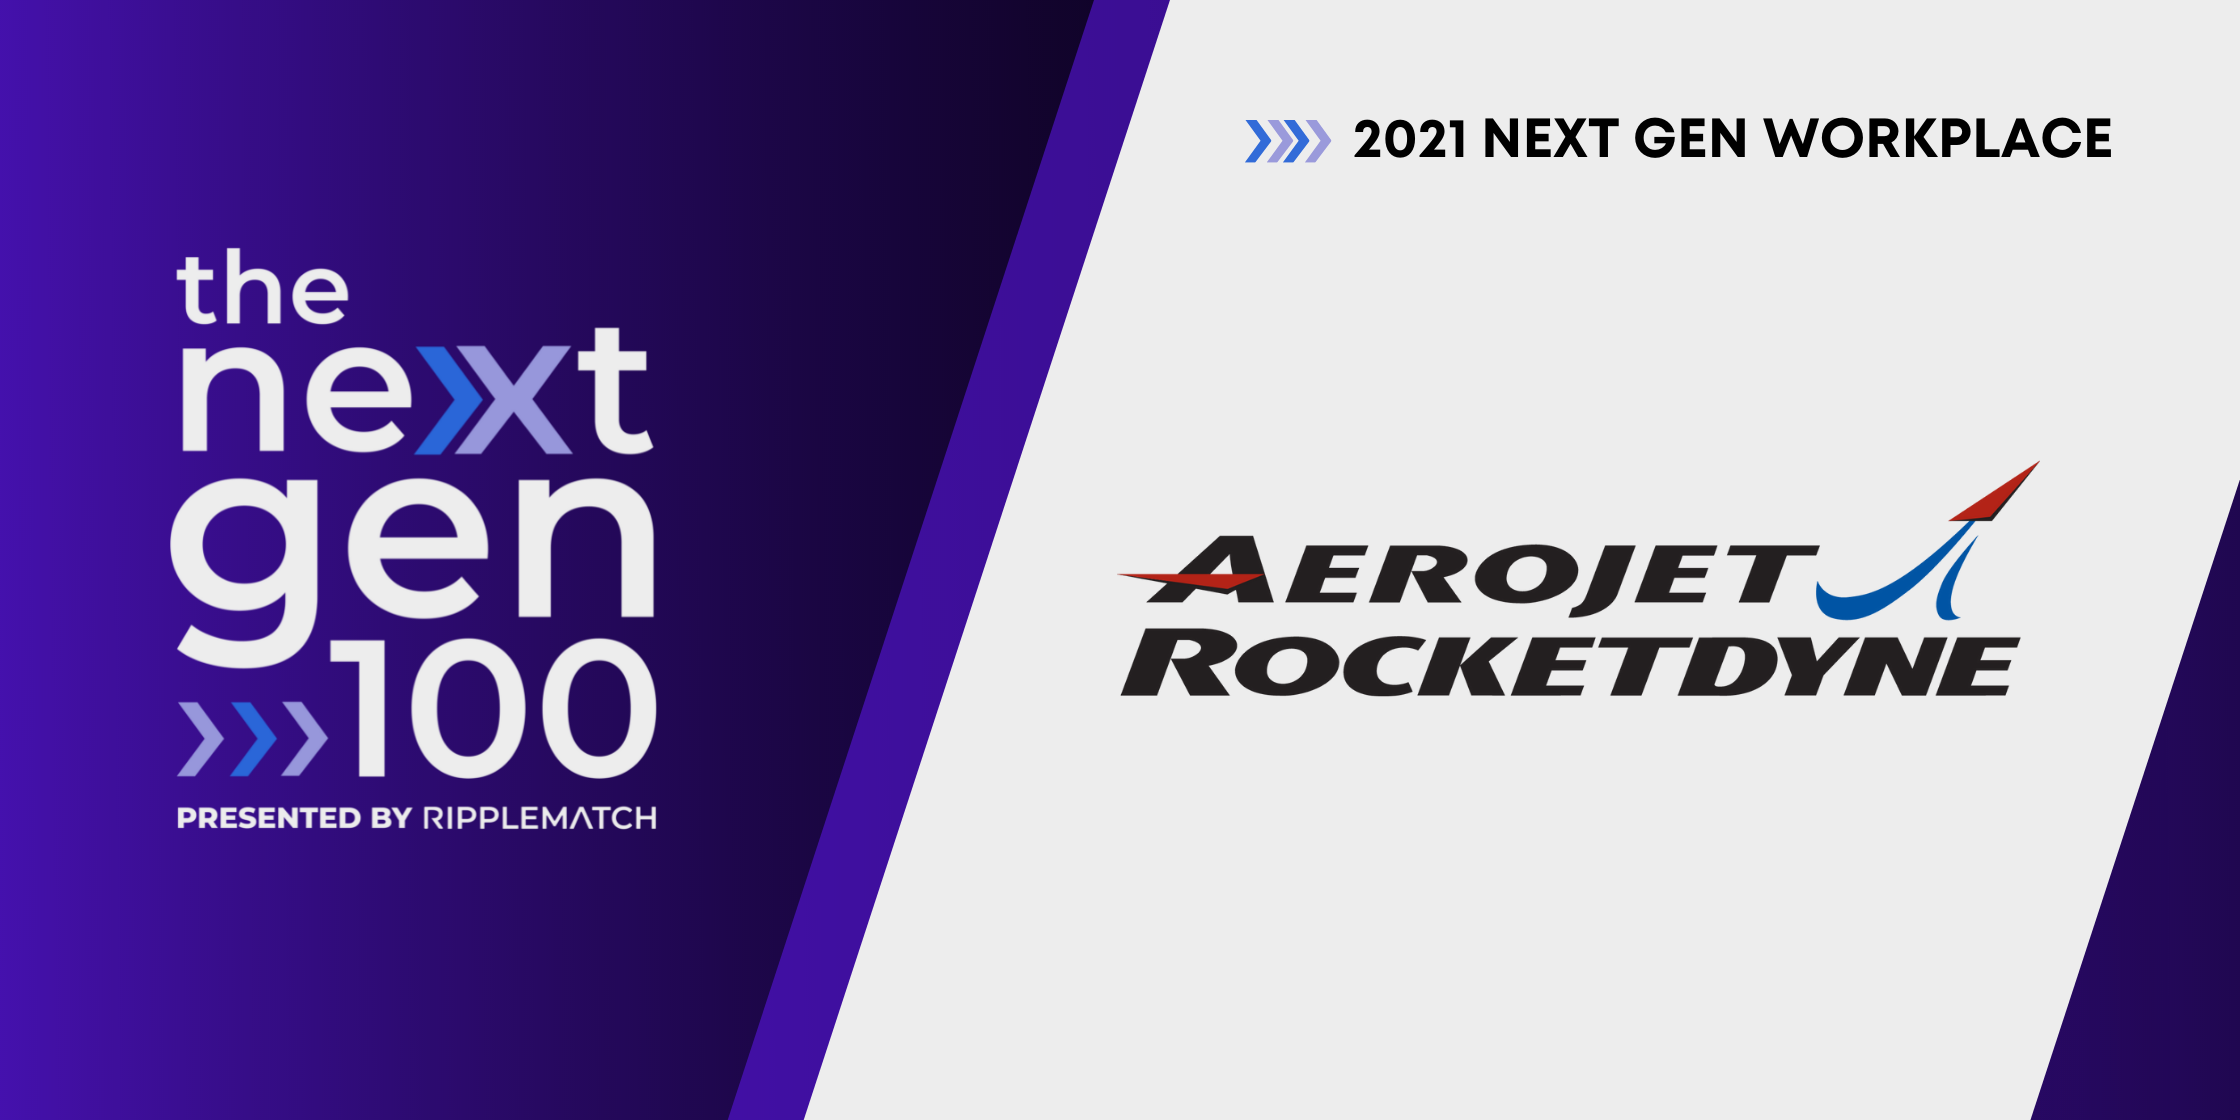 Aerojet Rocketdyne - Landing page & social image